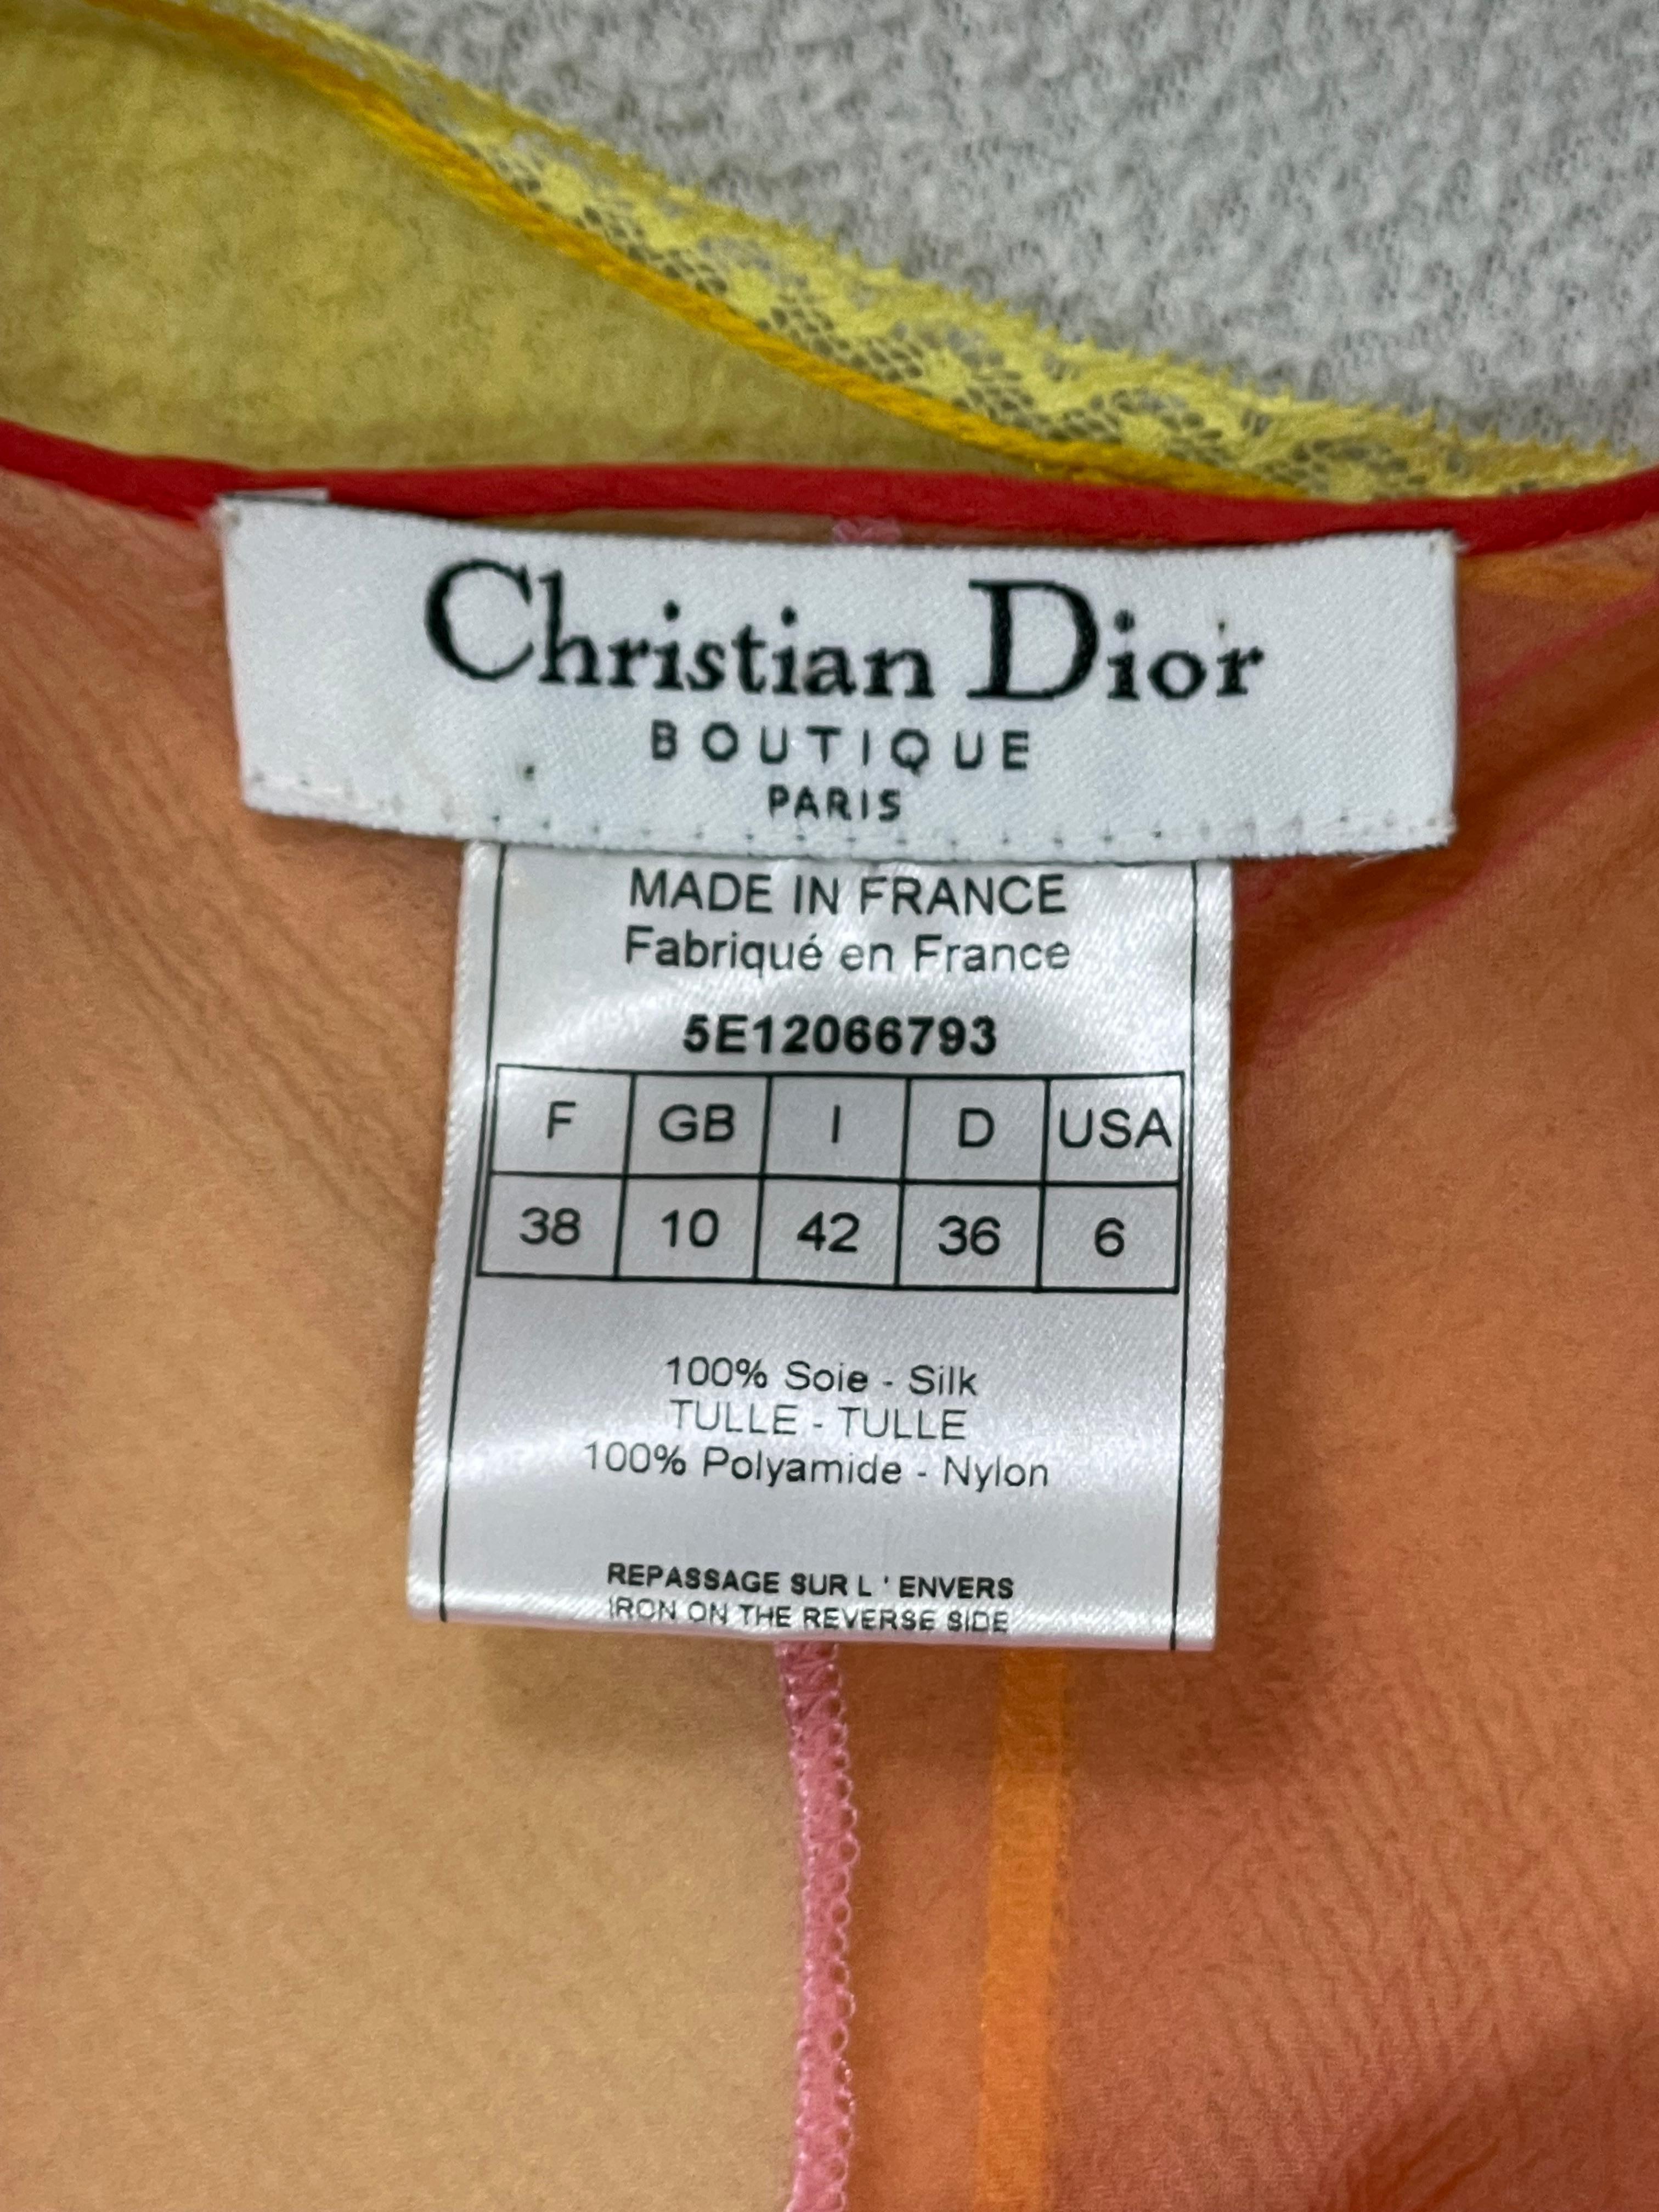 S/S 2005 Christian Dior by John Galliano Runway Sheer Pink & Yellow Silk Dress 1